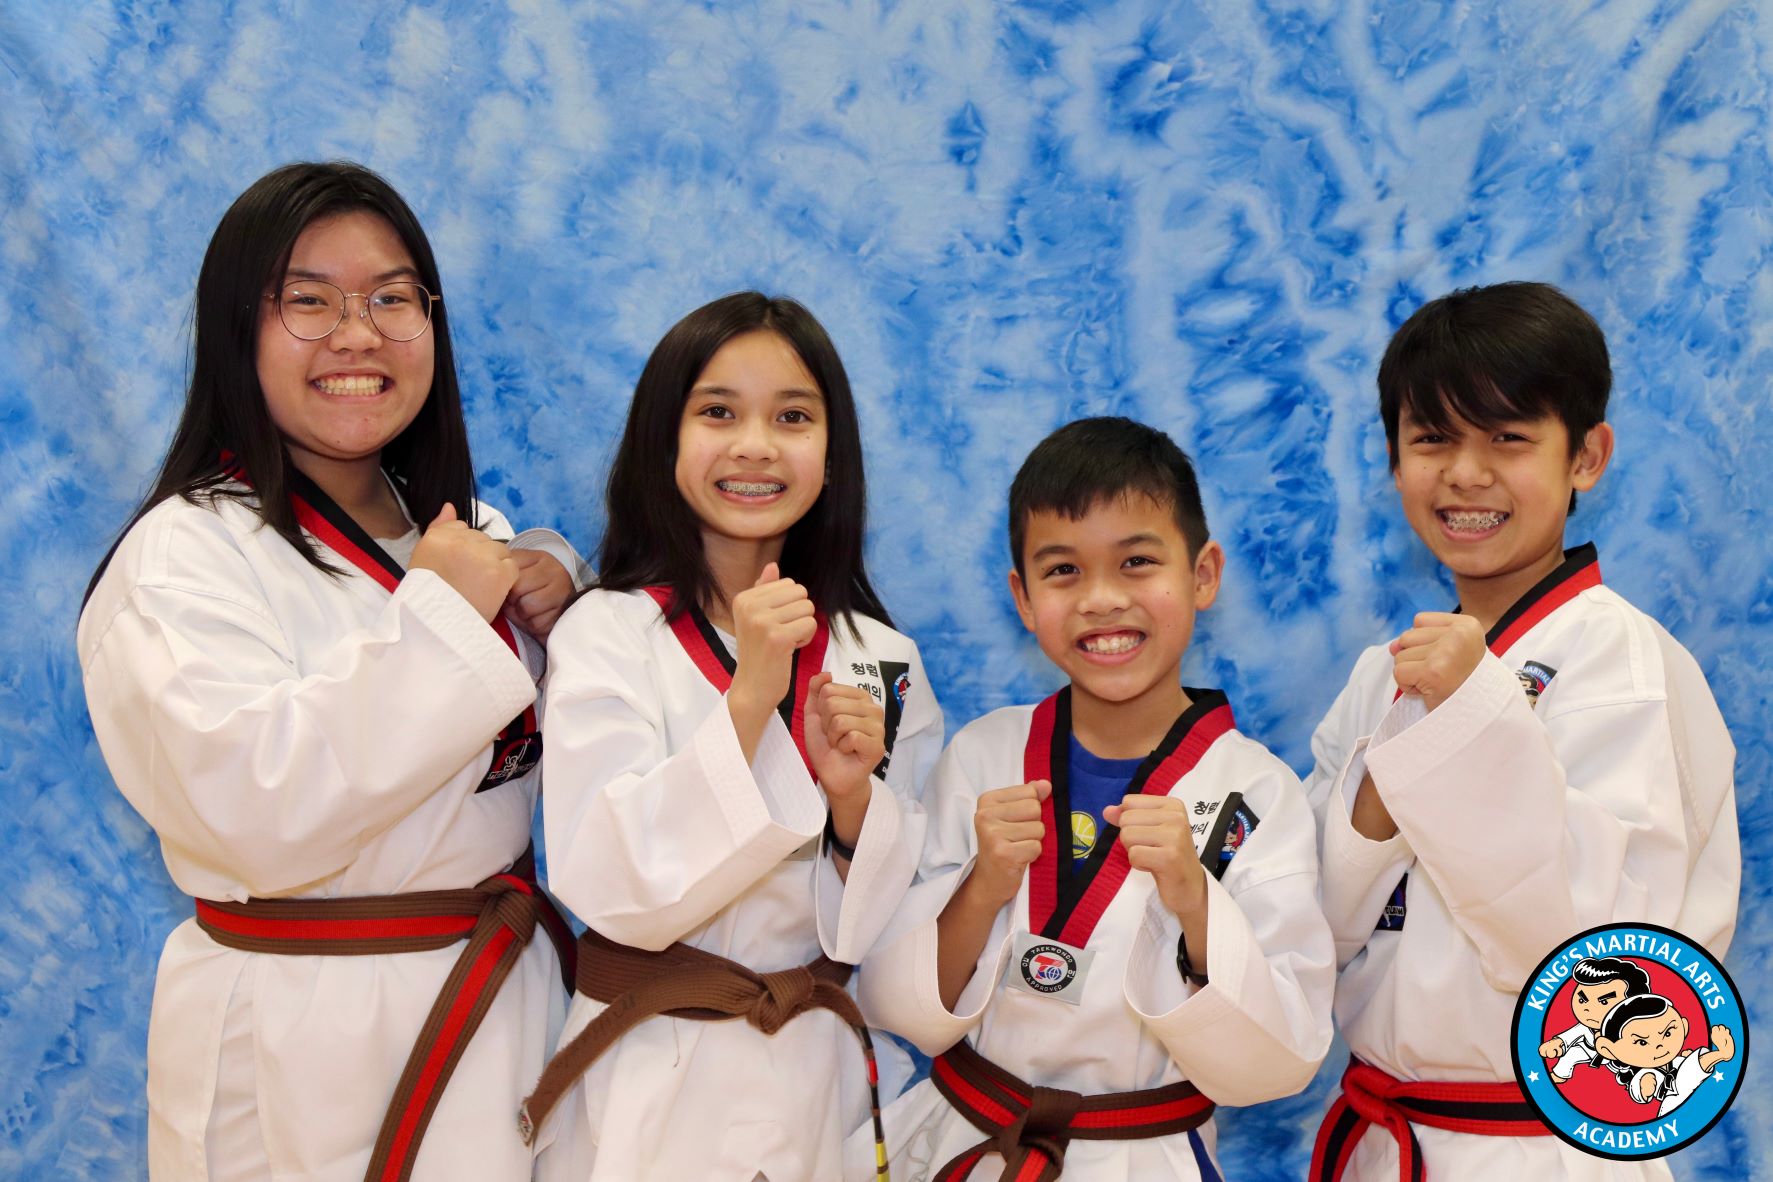 King's Martial Arts Academy Family Martial Arts